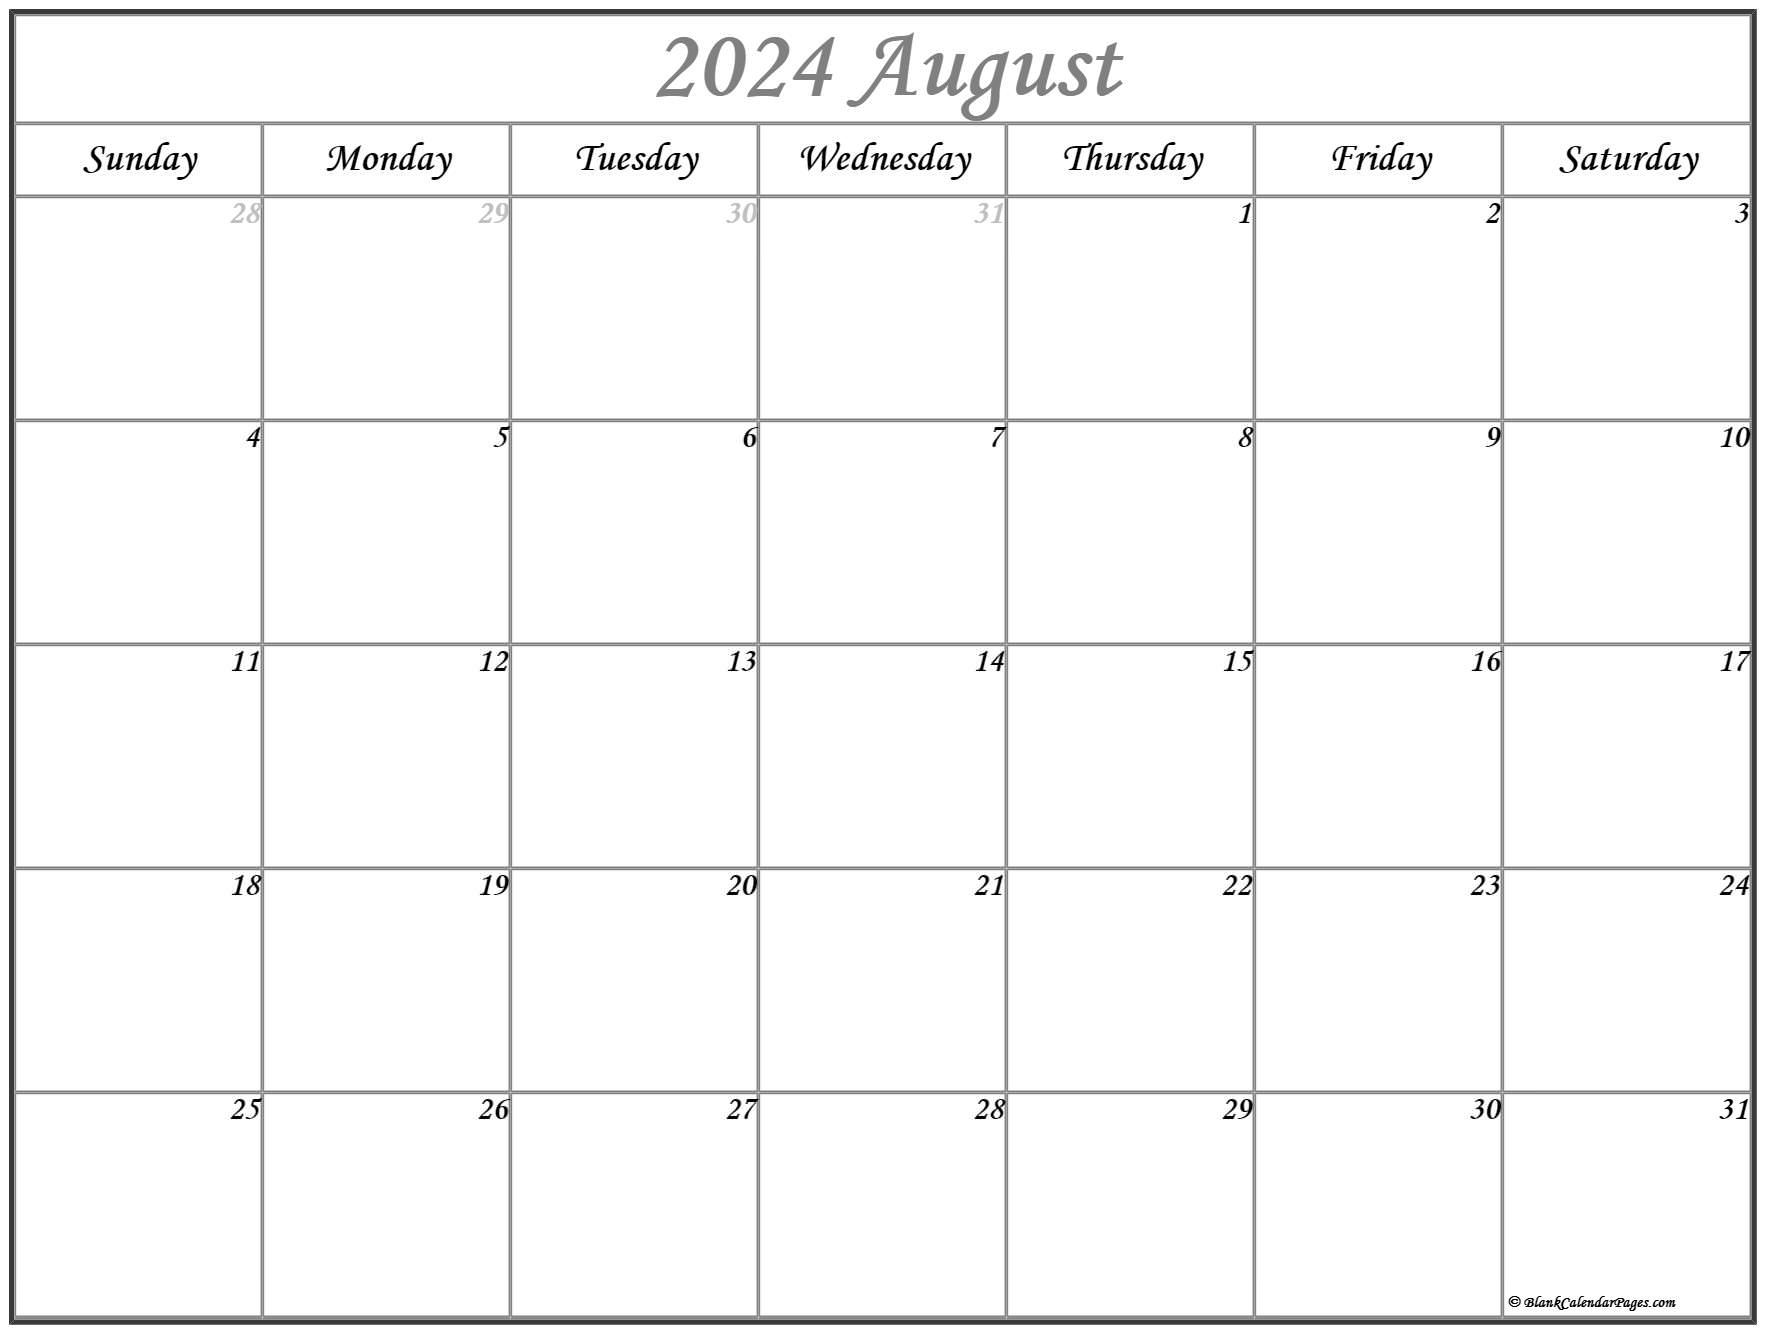 August 2022 calendar | free printable monthly calendars